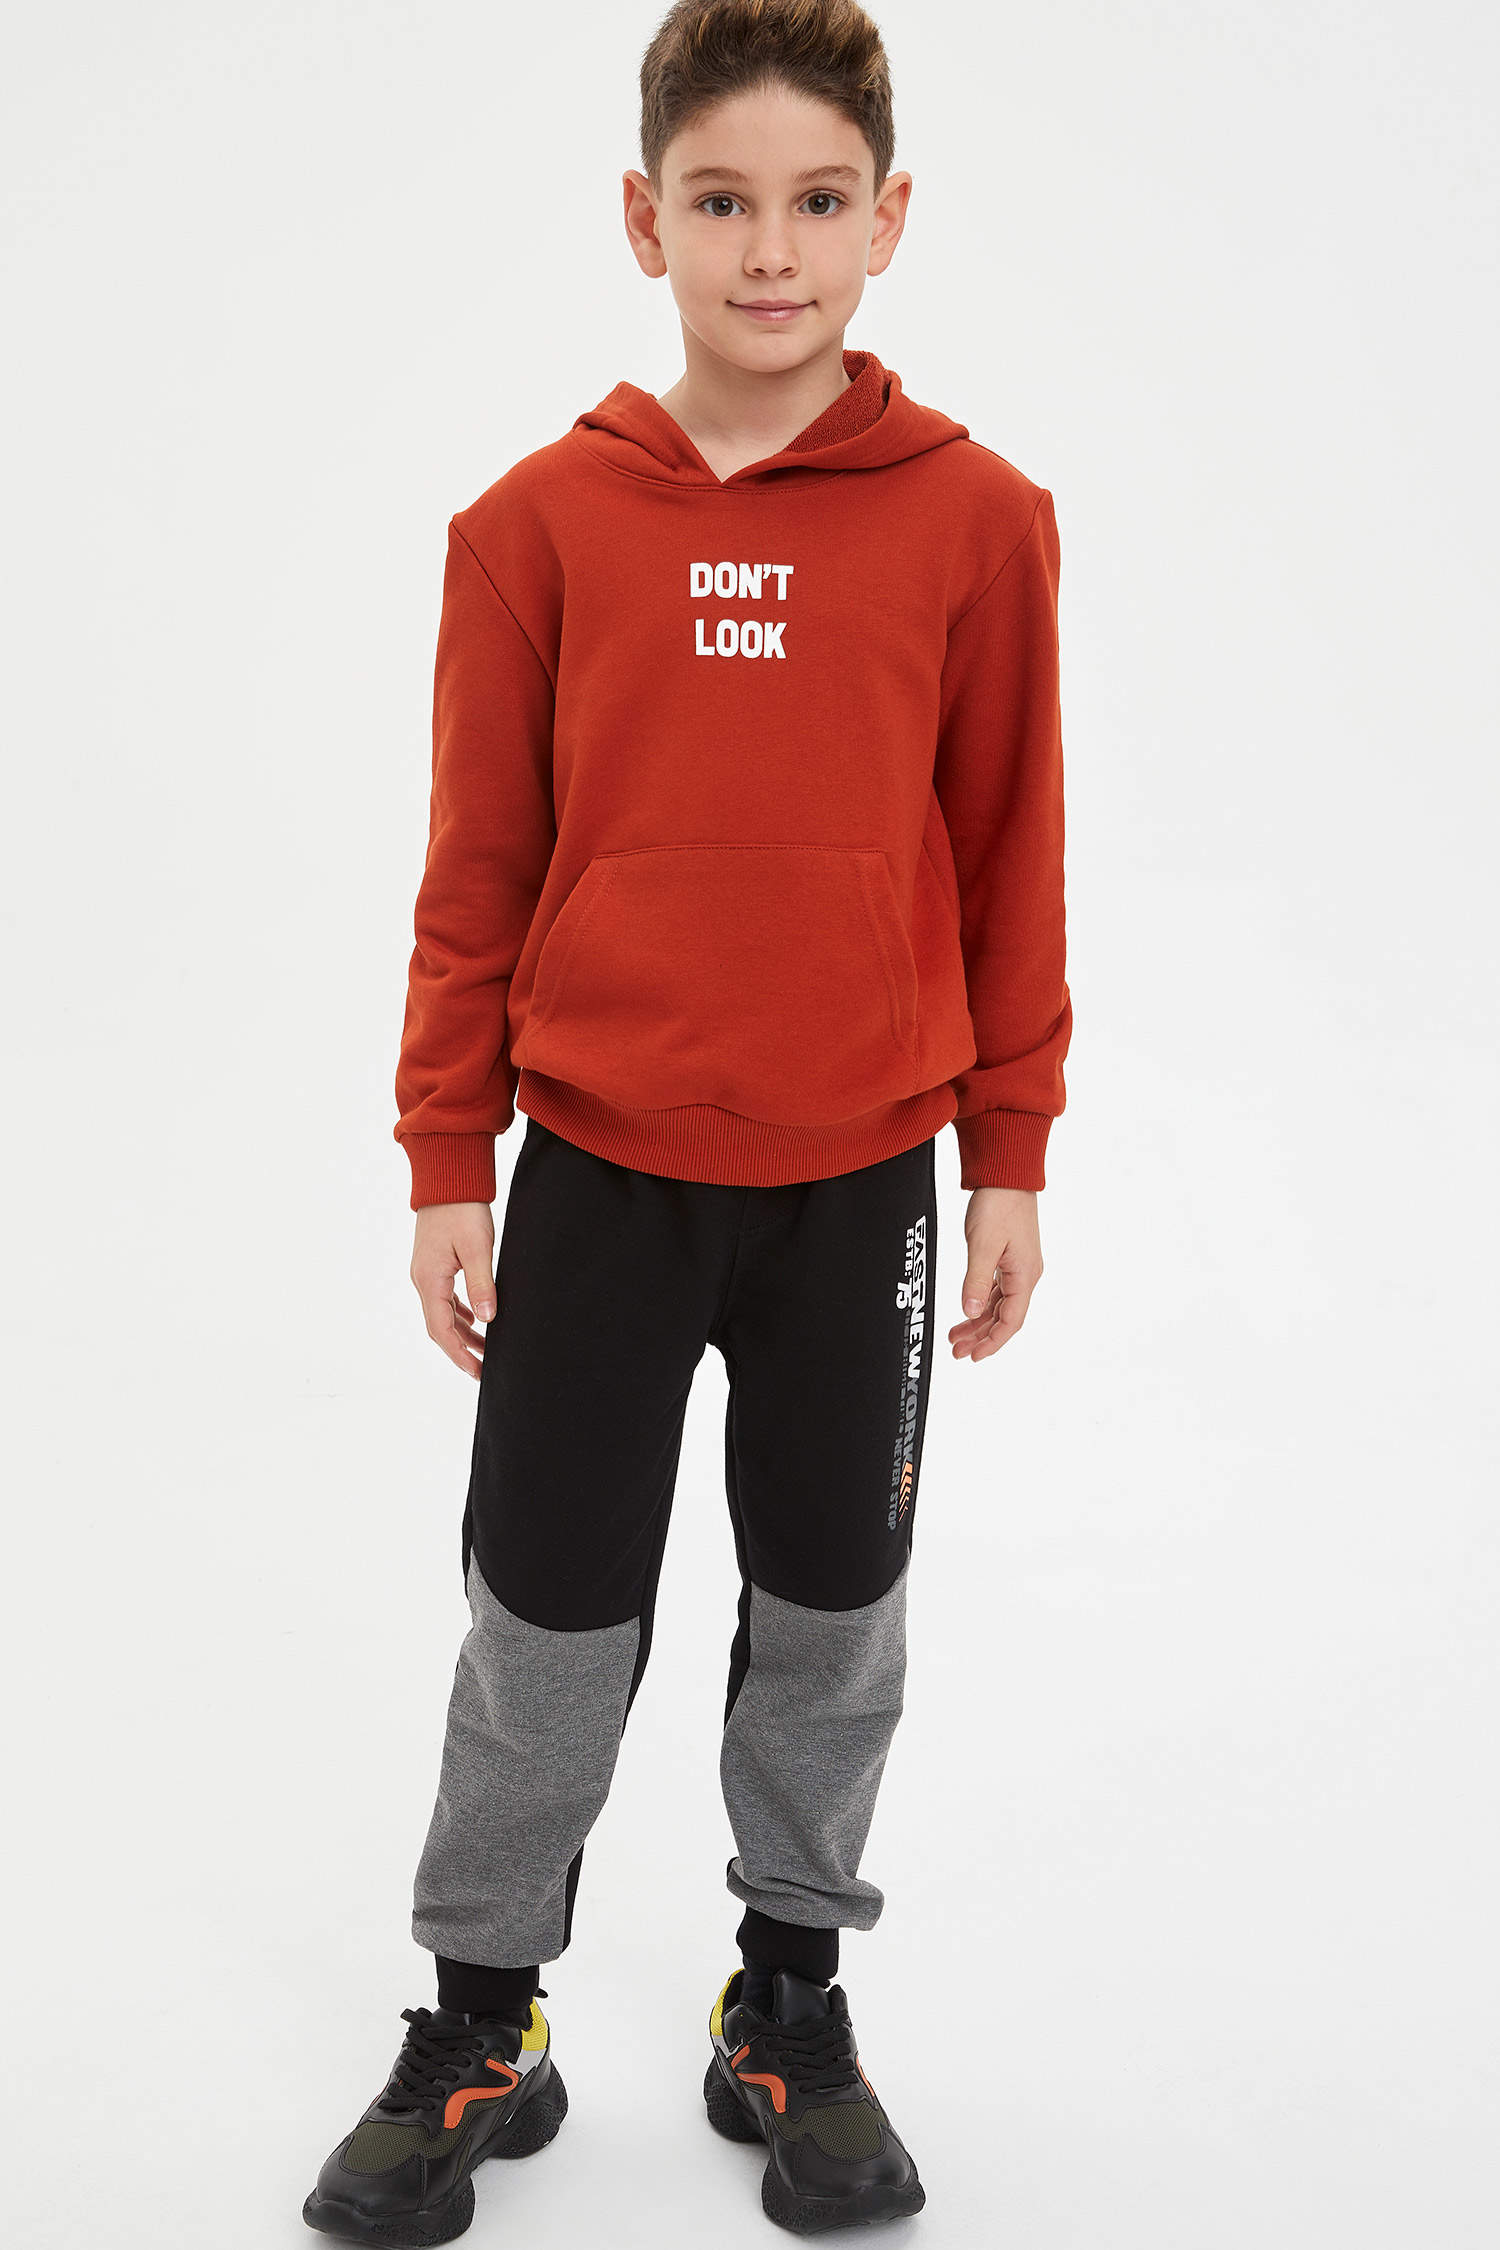 Black BOYS & TEENS Boy's Slim Fit Color-Block Sweatpants 1204048 | DeFacto